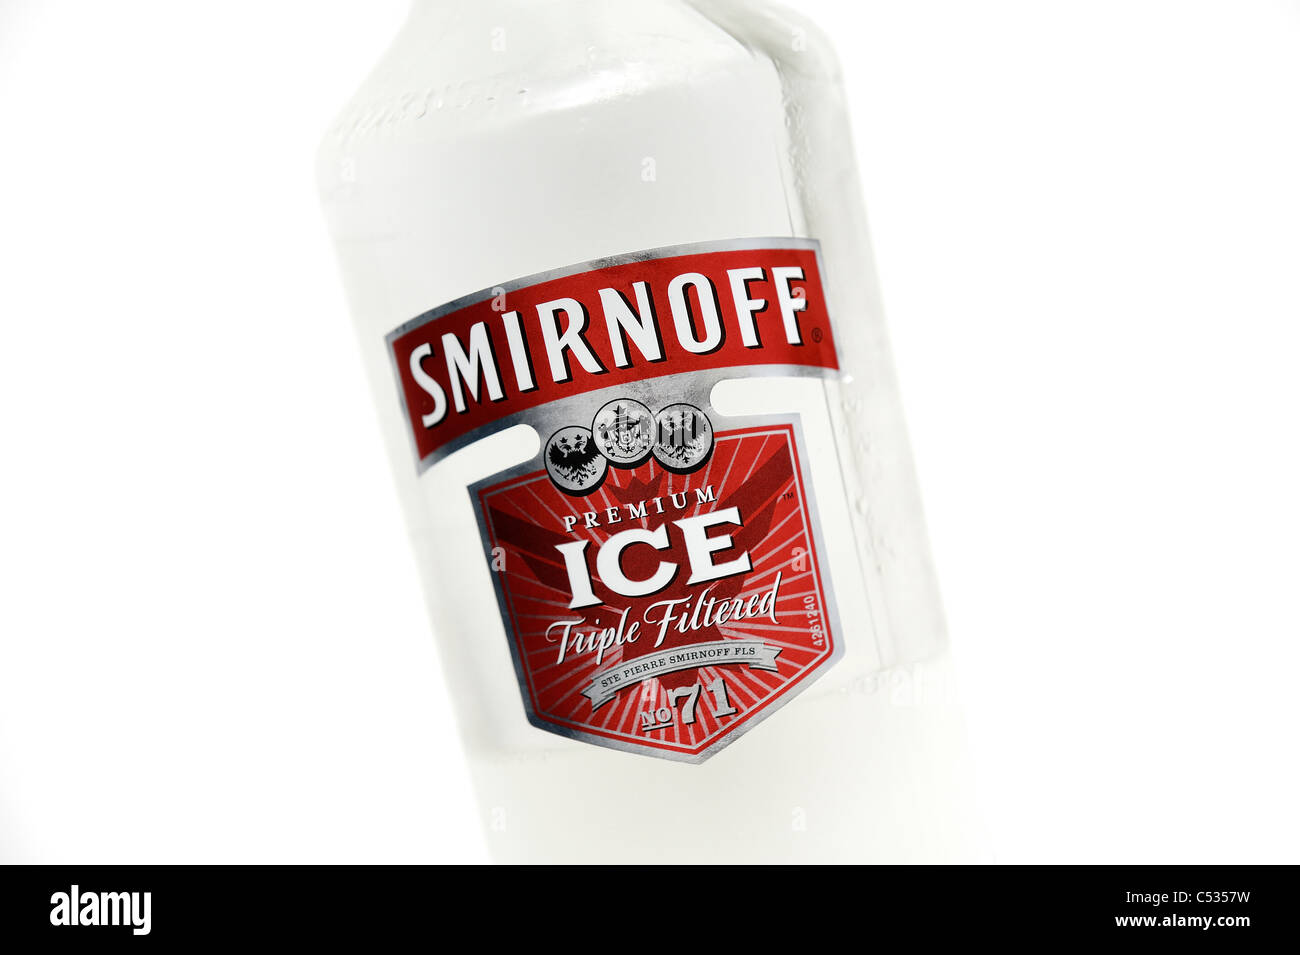 smirnoff ice logo